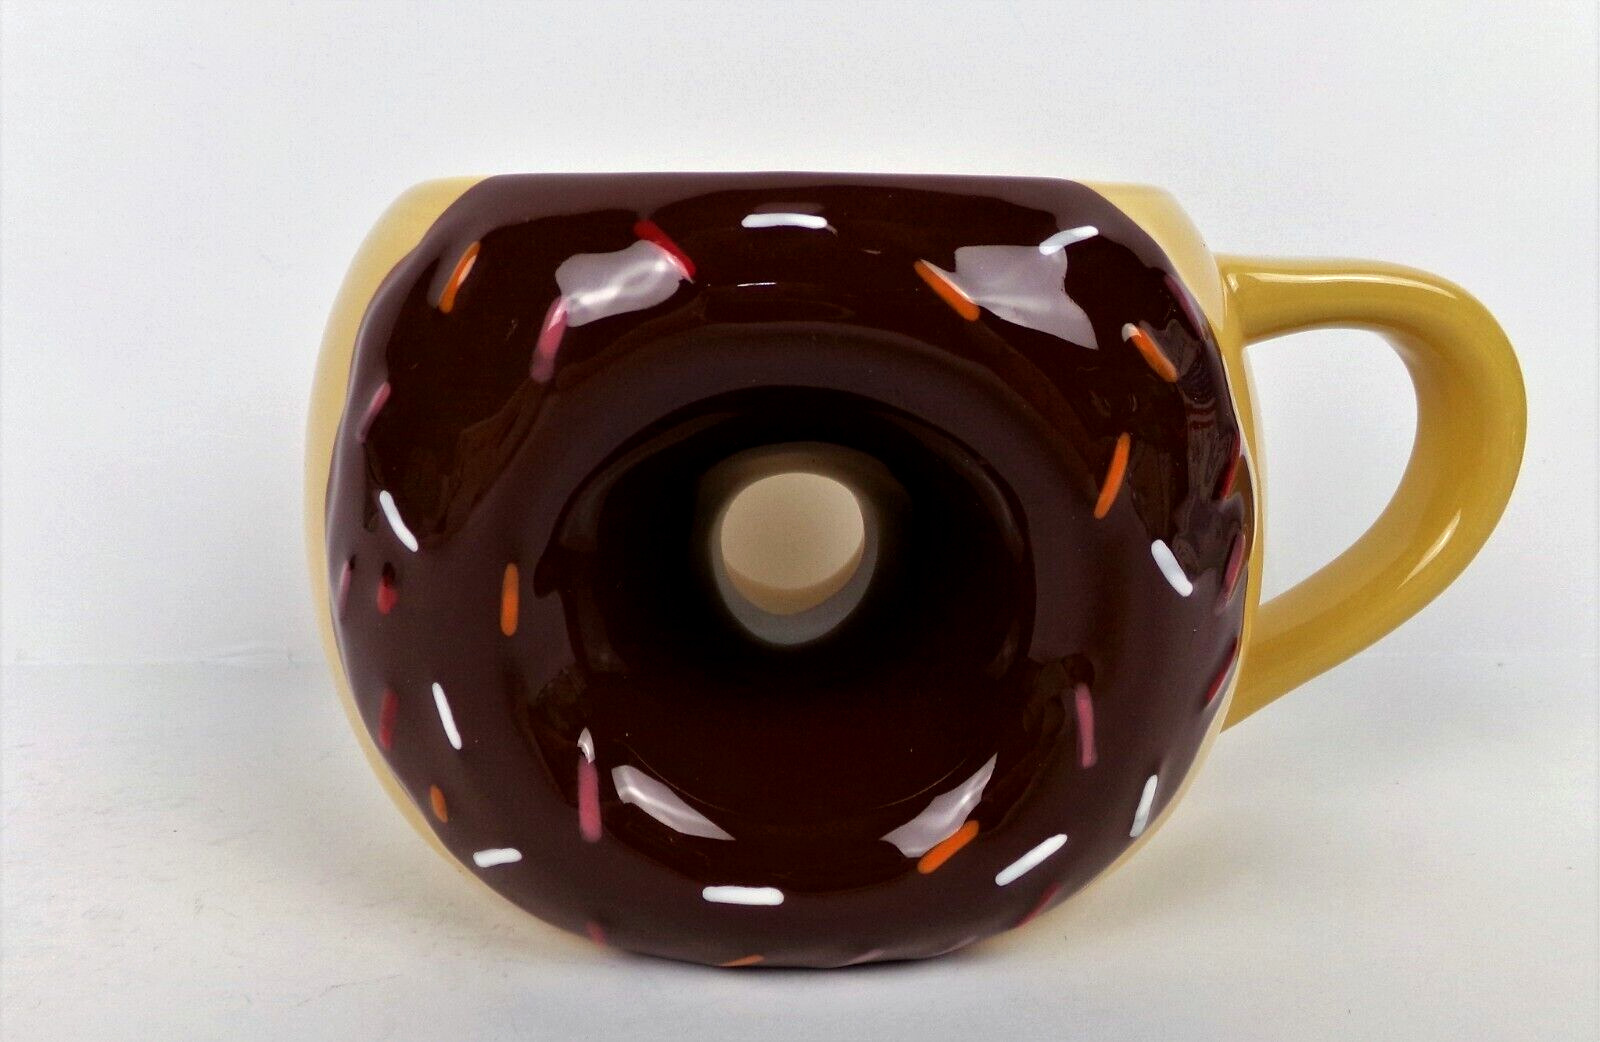 TAG Sprinkle Doughnut Shaped Mug Chocolate Frosting Ceramic Donut Coffee Mug